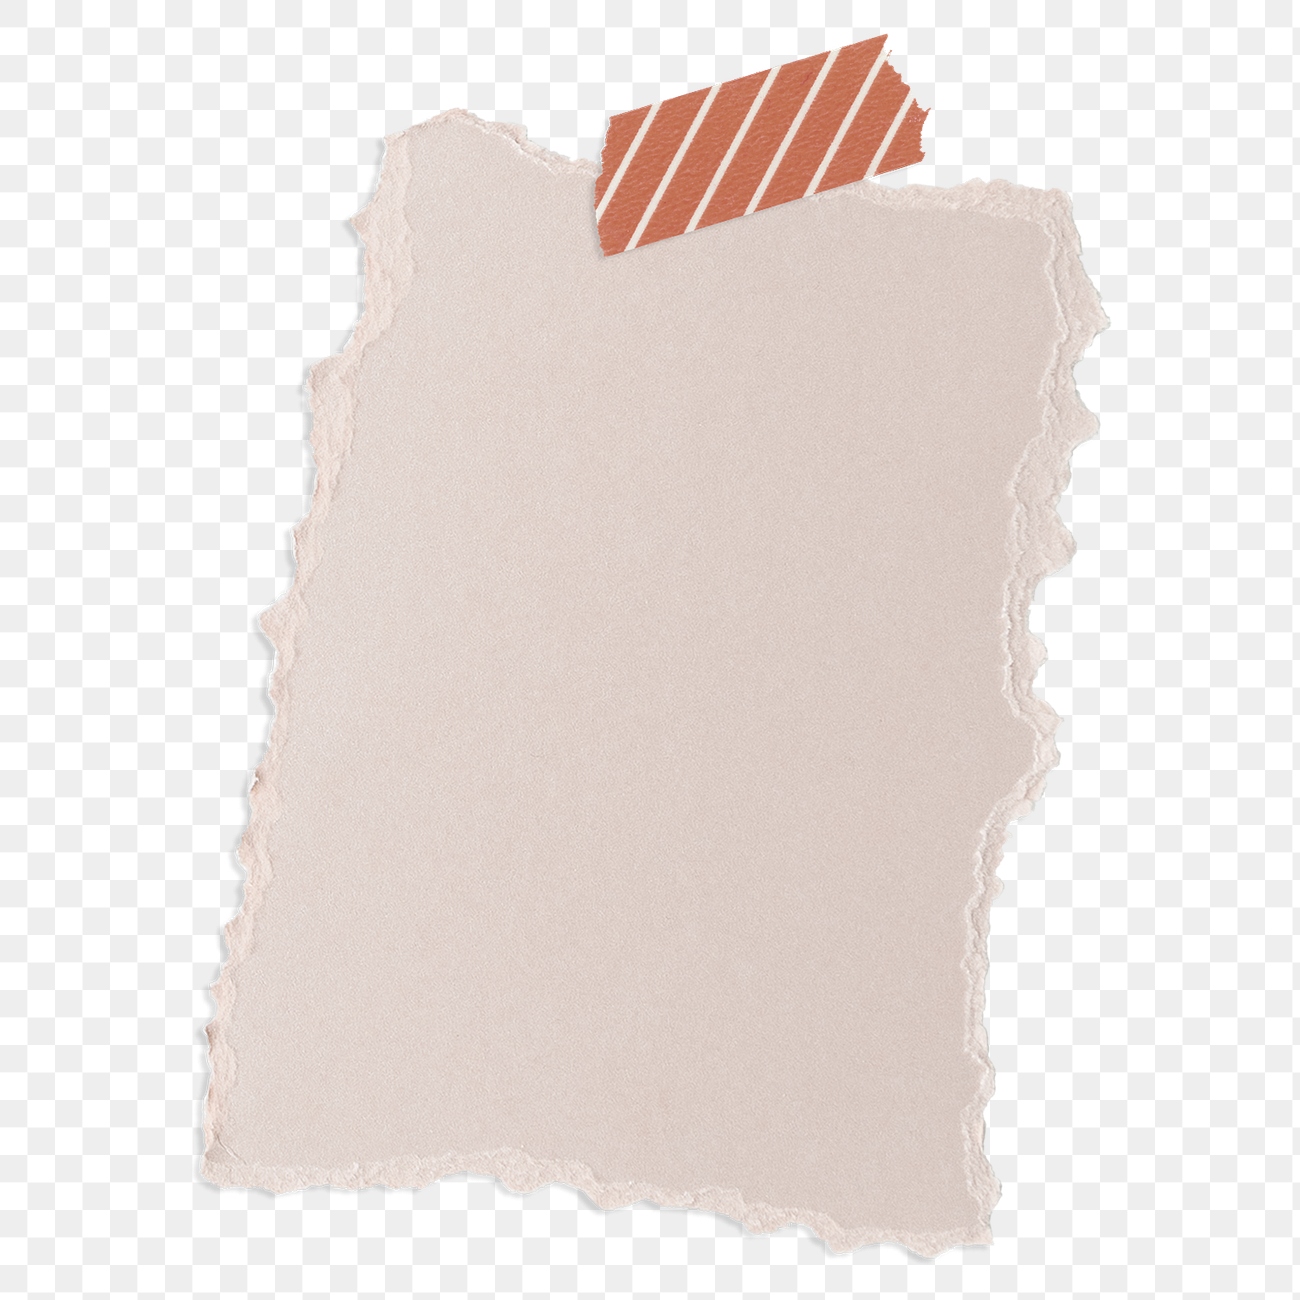 Washi tape on a blank pink notepaper design element 